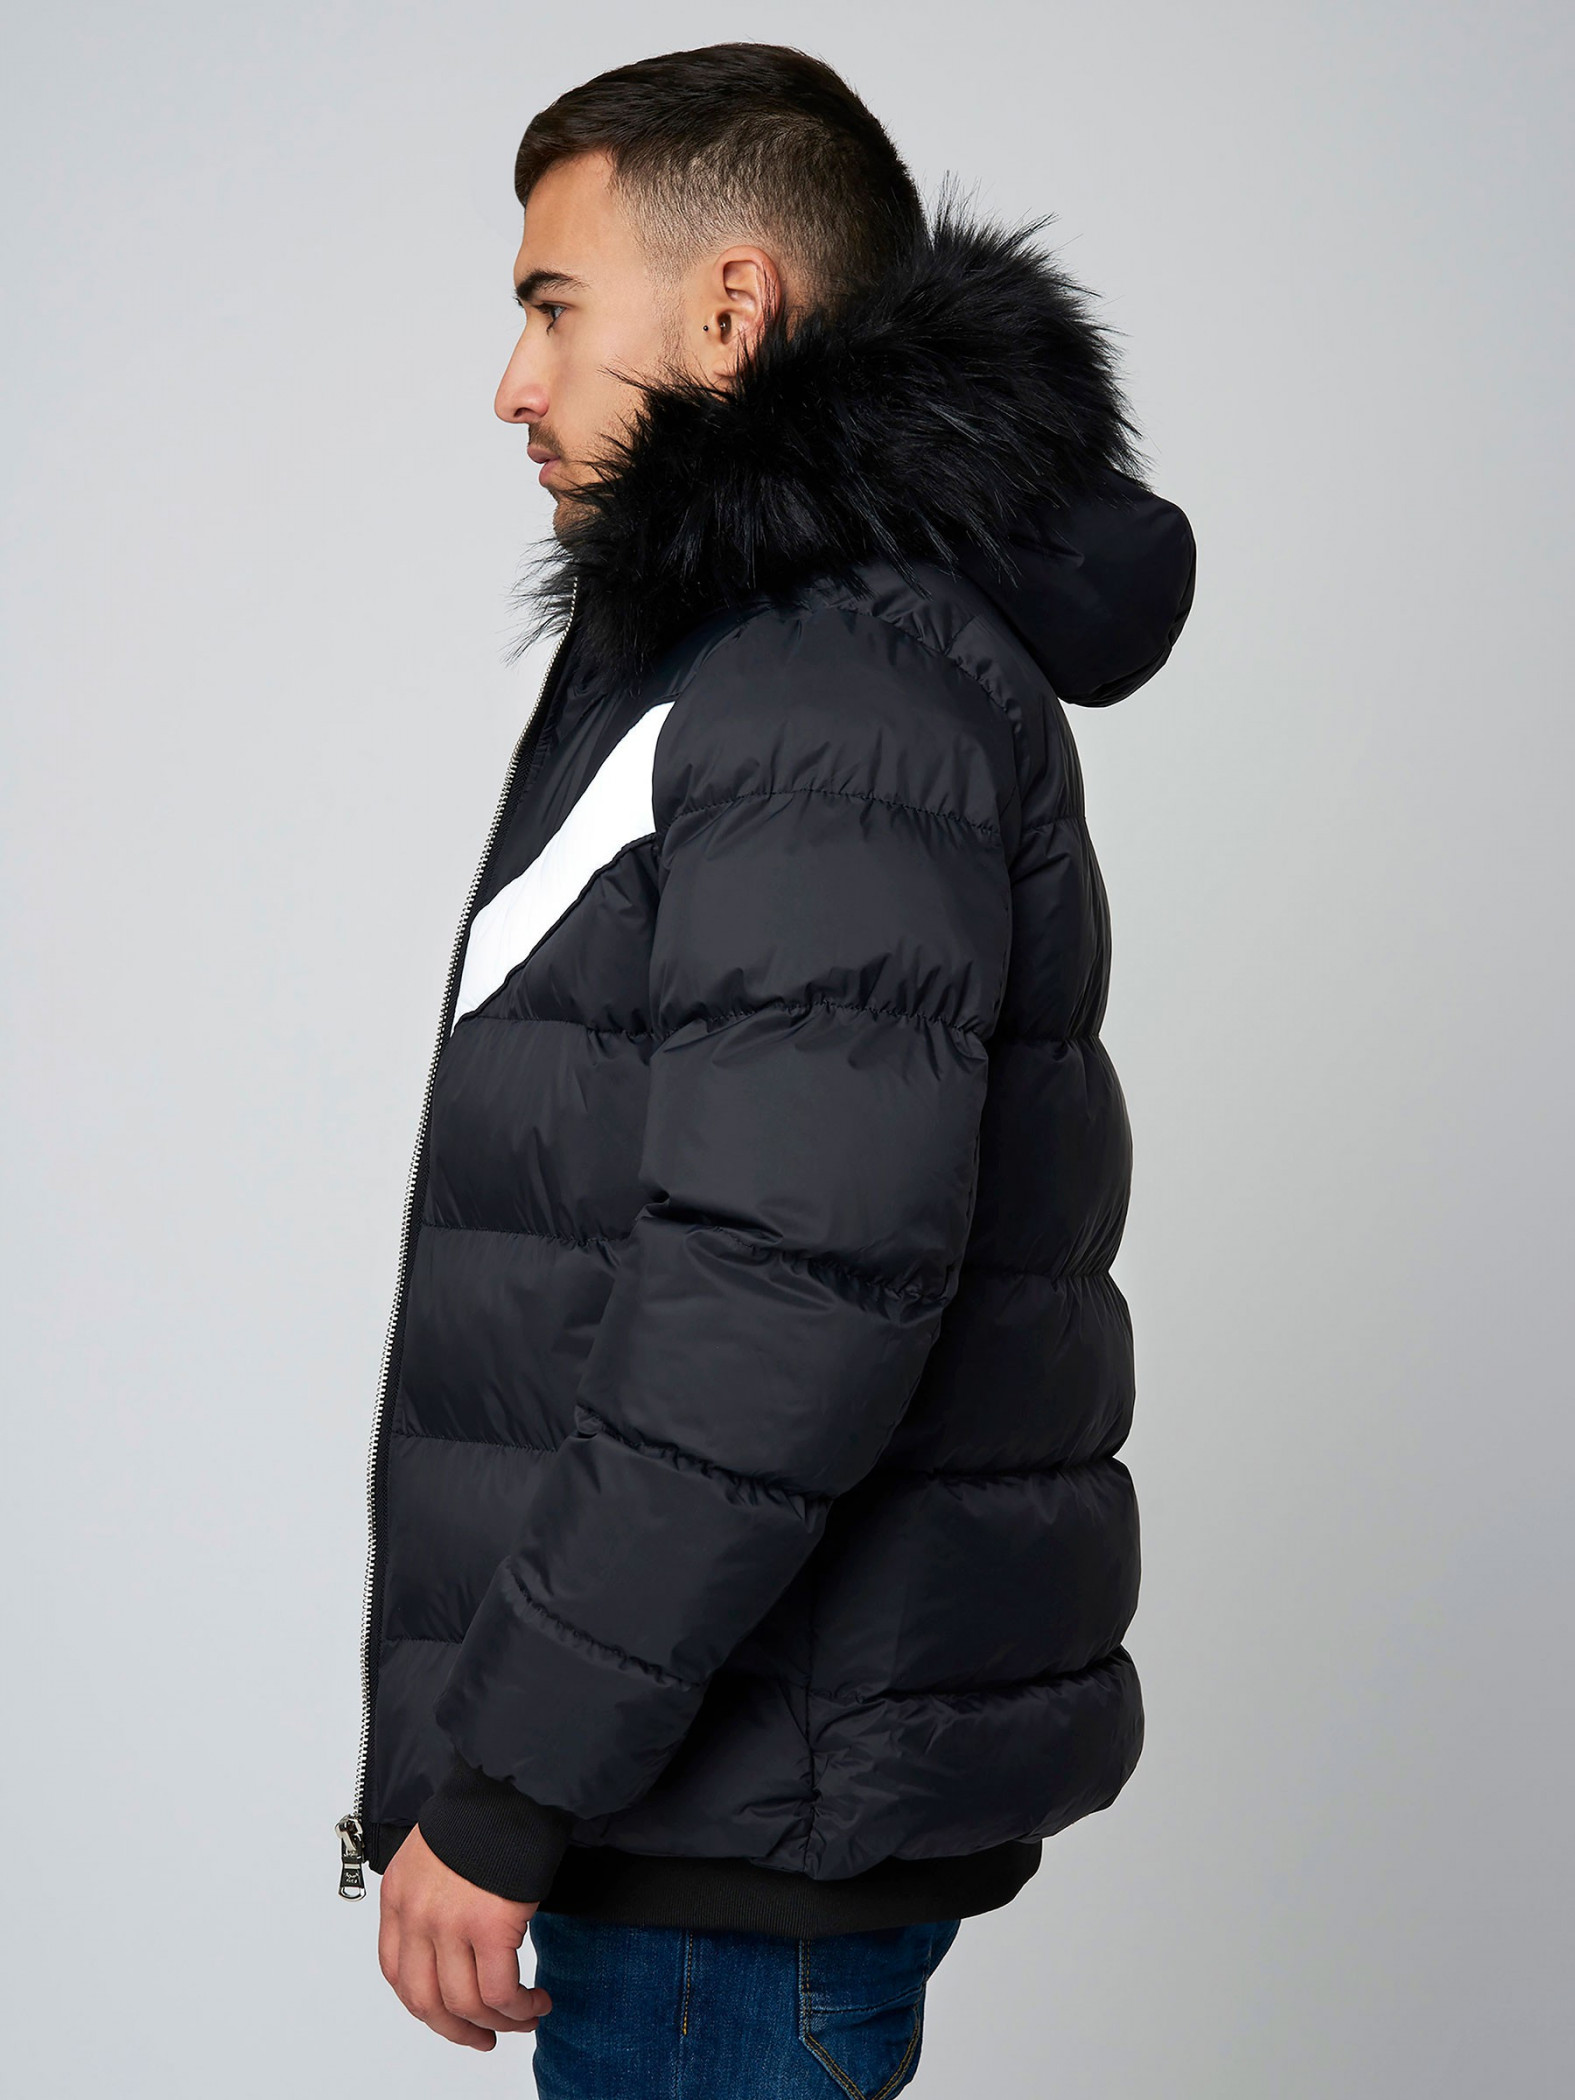 Men's Short Puffer Jacket with Fur Hood Project X Paris